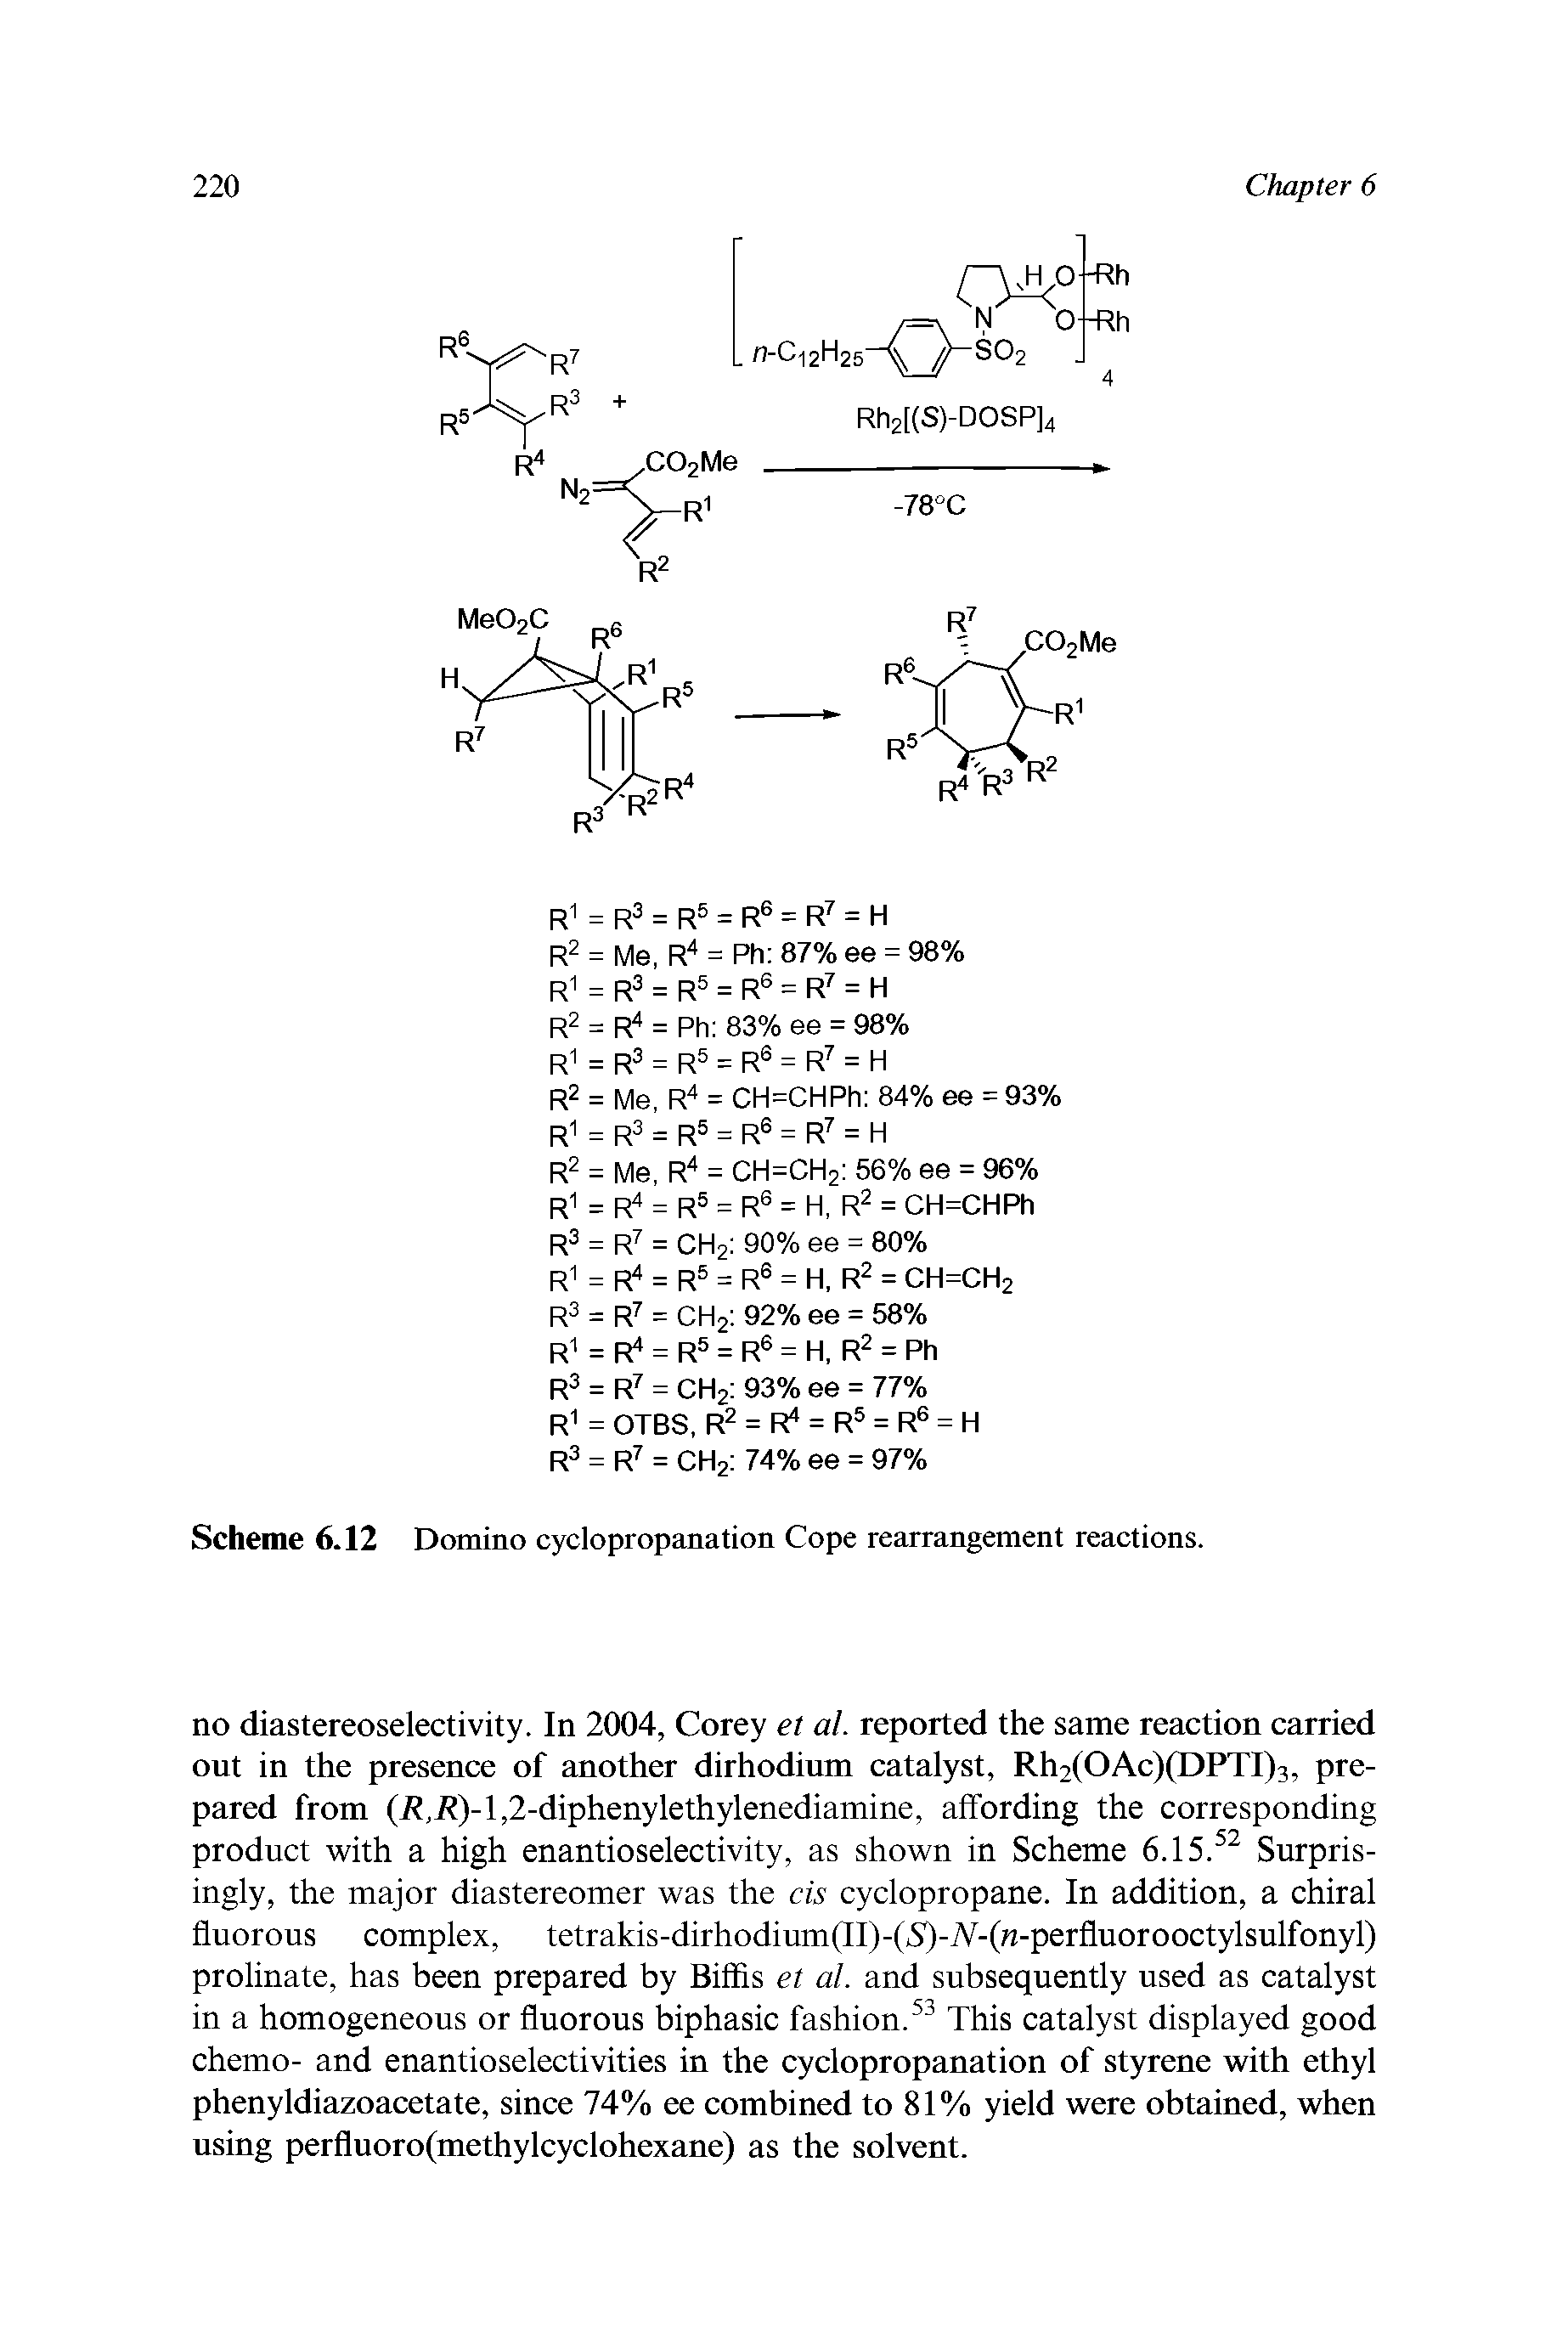 Scheme 6.12 Domino cyclopropanation Cope rearrangement reactions.